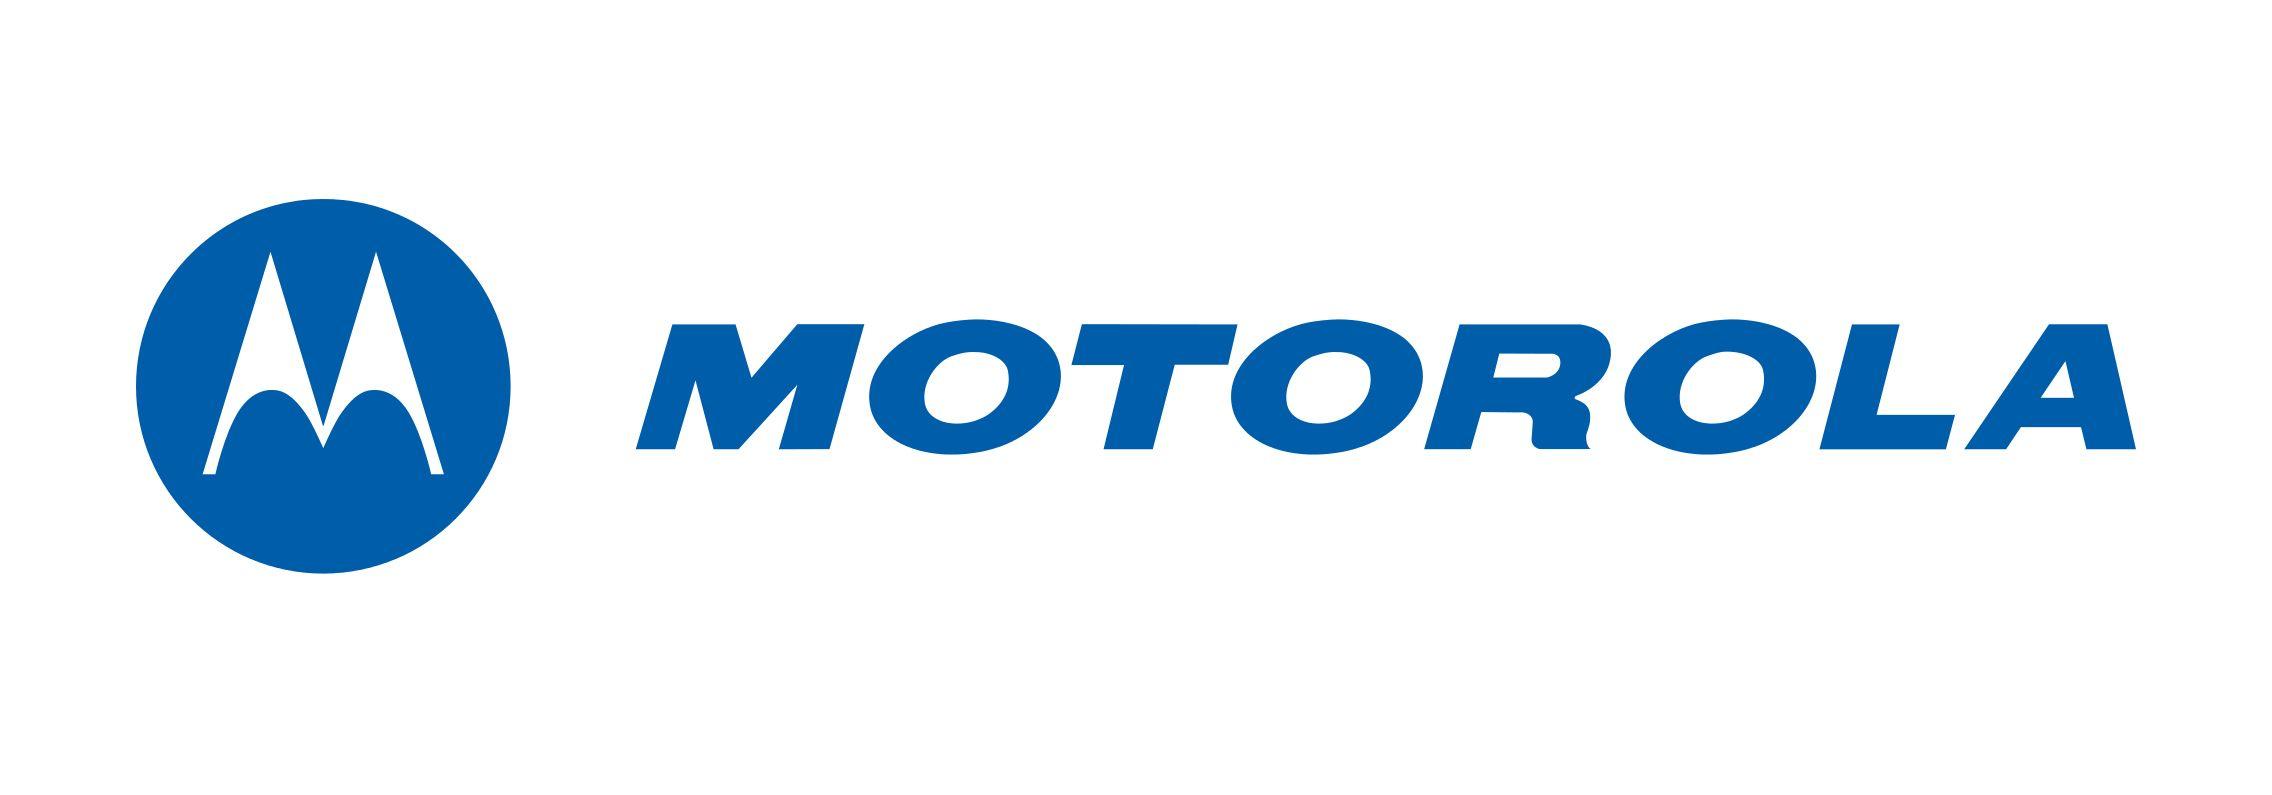 Moto Logo - Motorola Logo, Motorola Symbol, History and Evolution